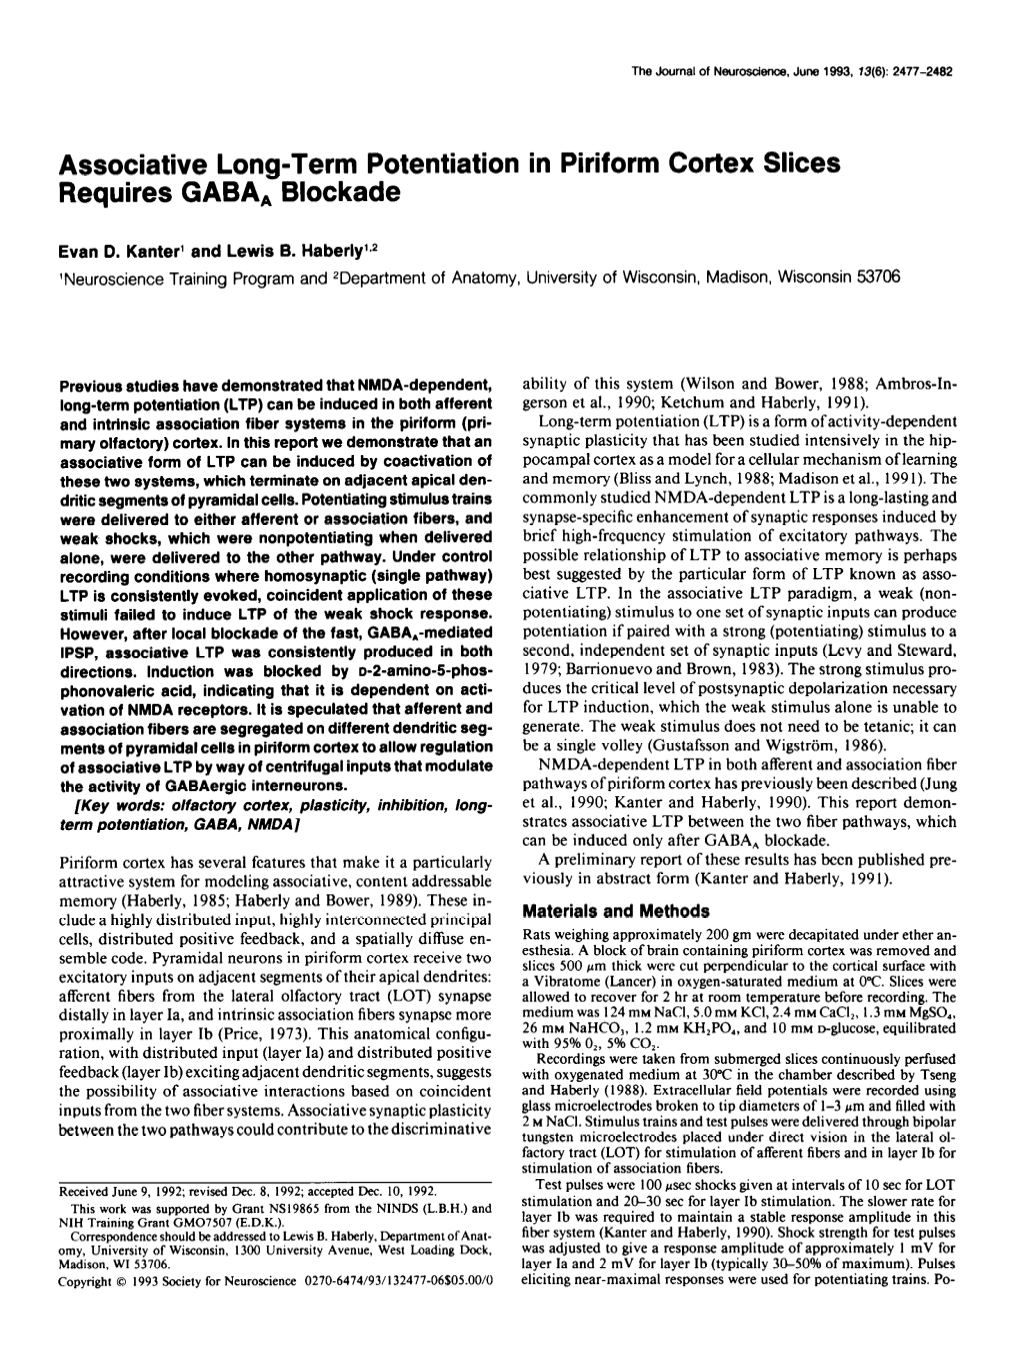 Associative Long-Term Potentiation in Piriform Cortex Slices Requires GABA, Blockade